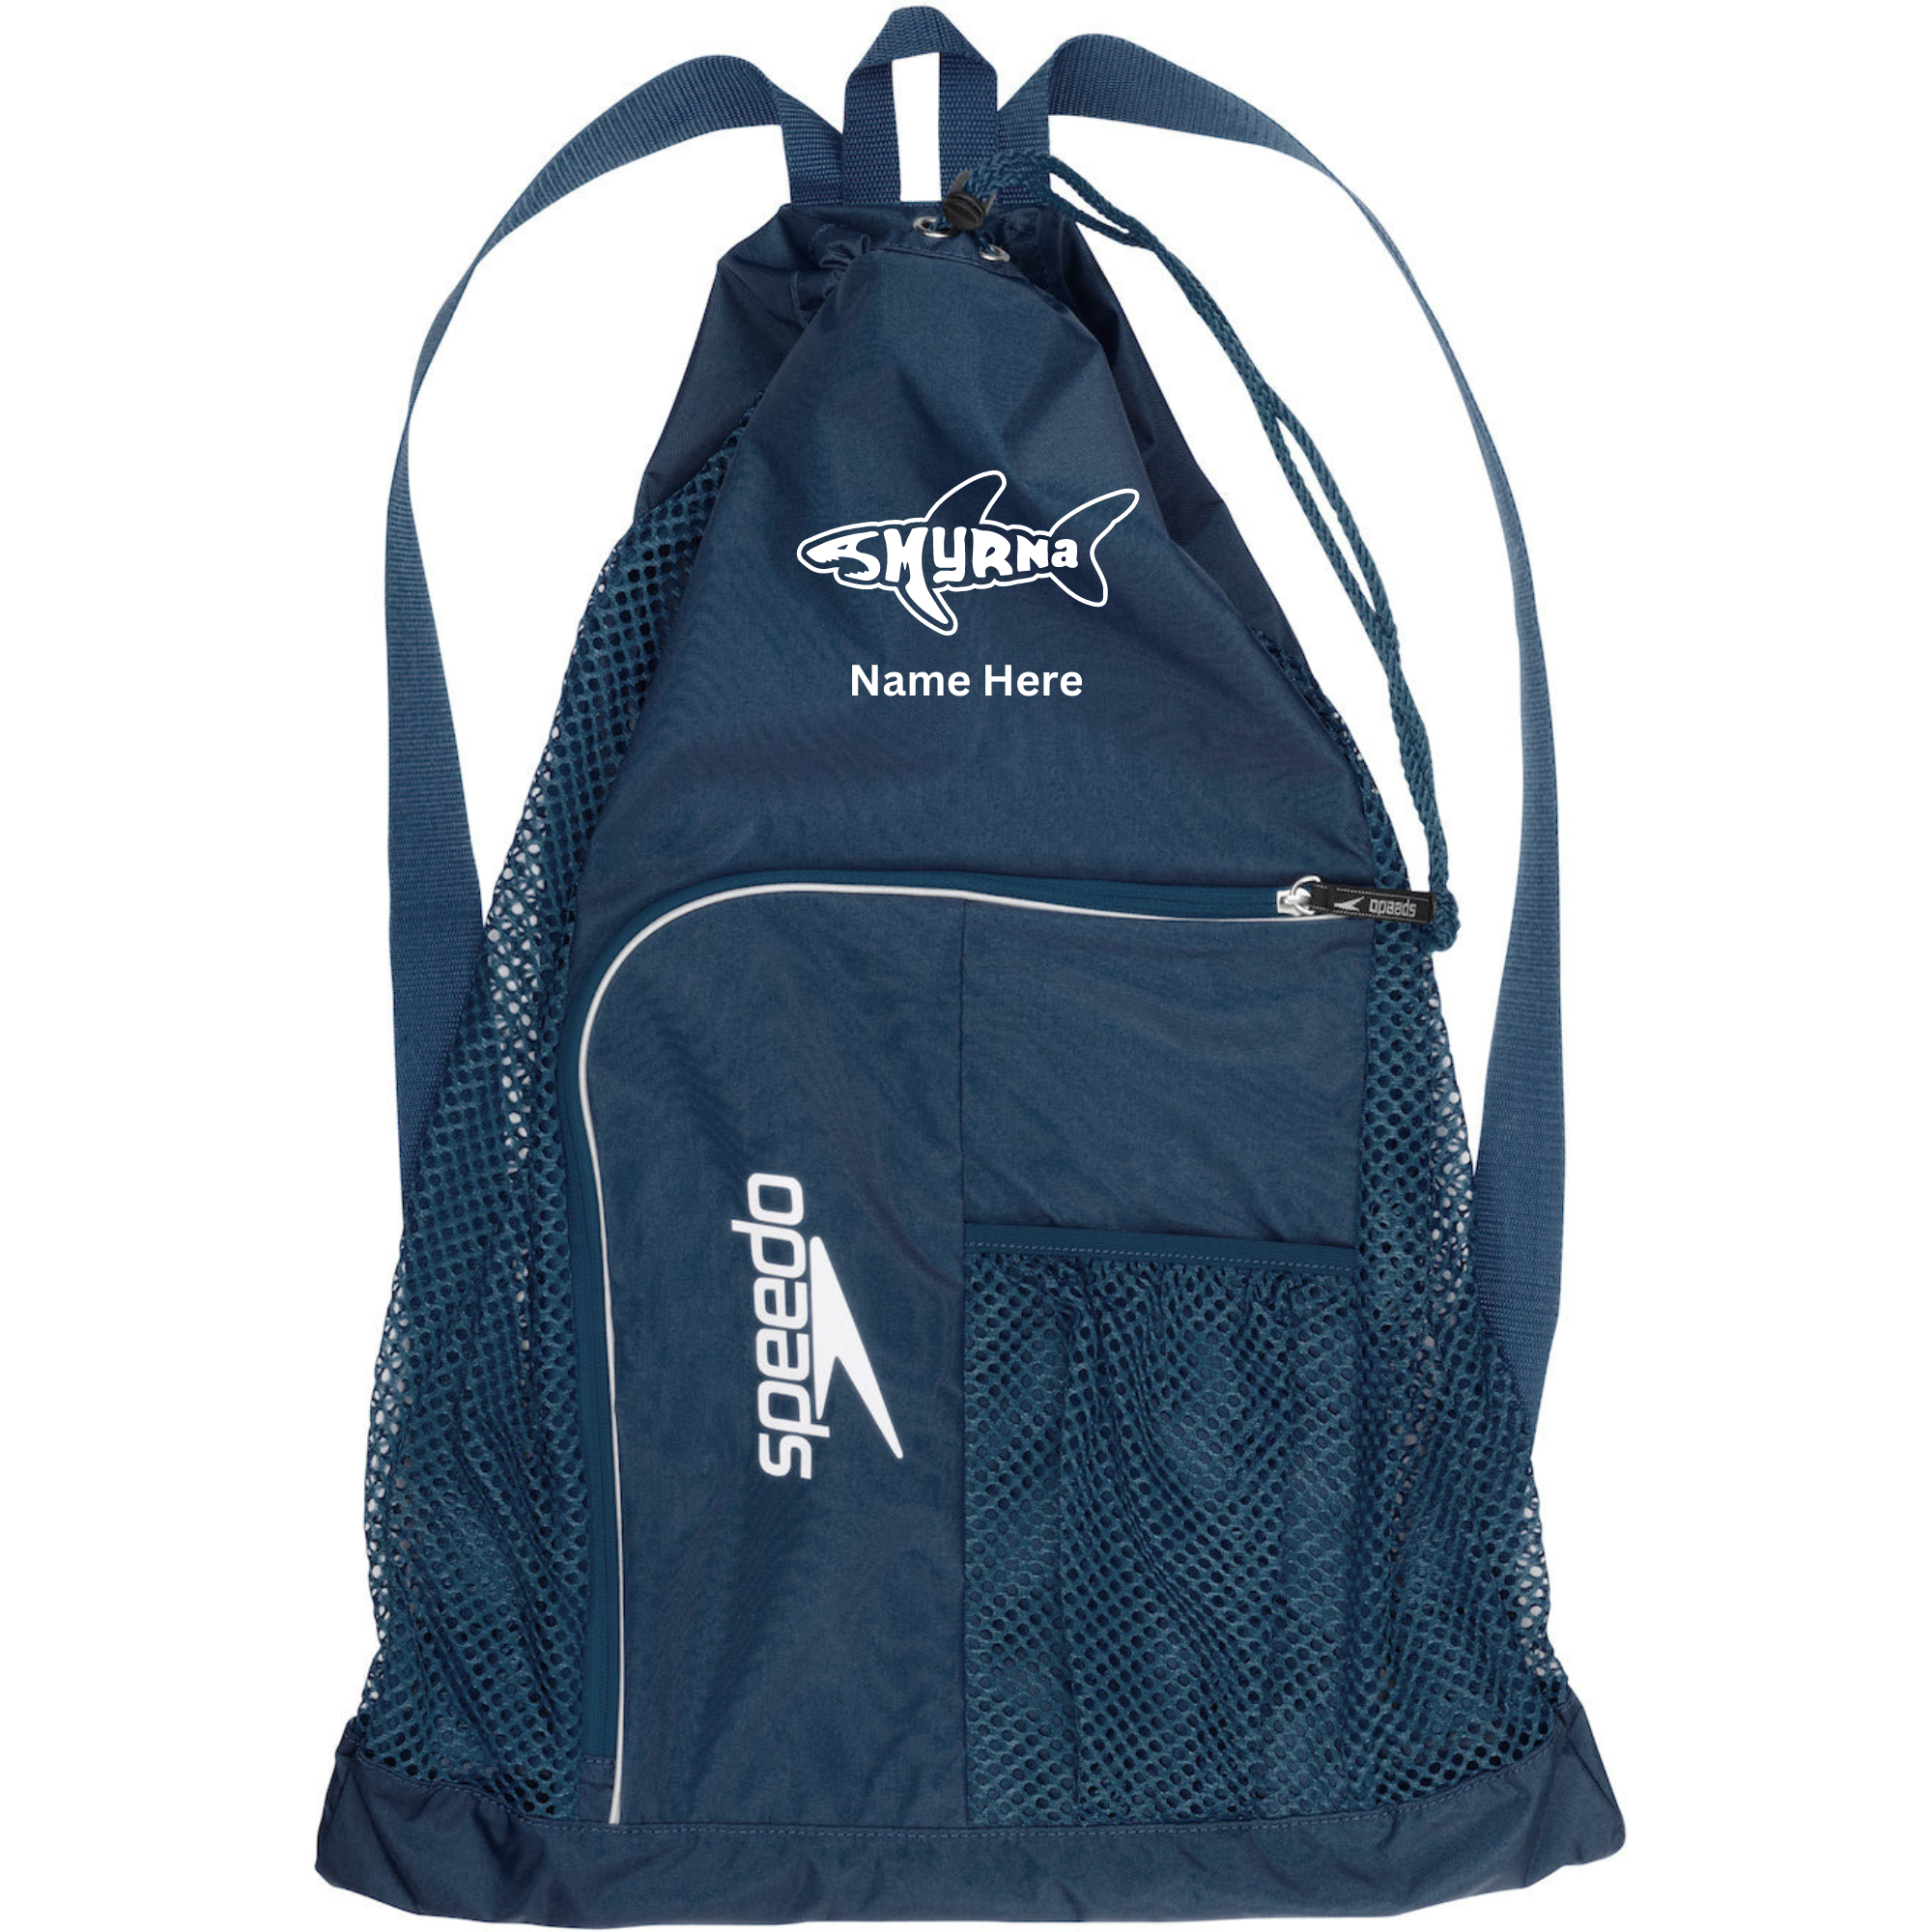 Speedo Deluxe Ventilator Backpack (Customized) - Smyrna Sharks